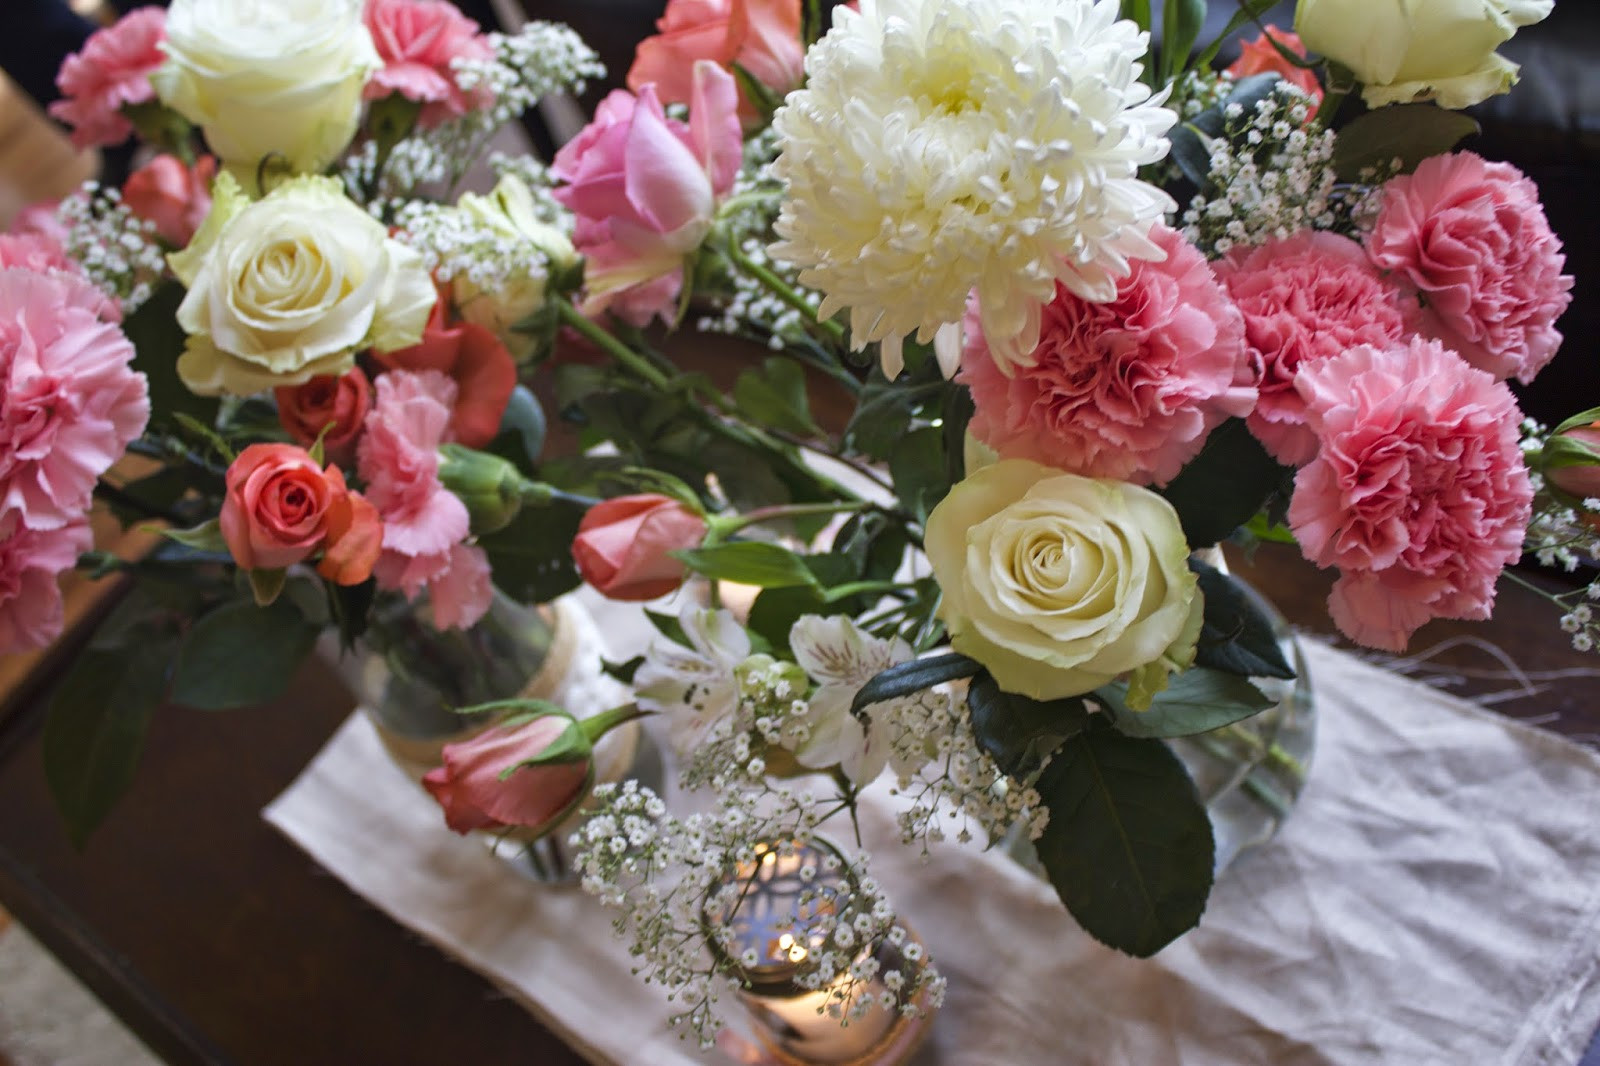 Wholesale Flowers For Weddings
 Buy premium bulk flowers for a mesmerizing wedding